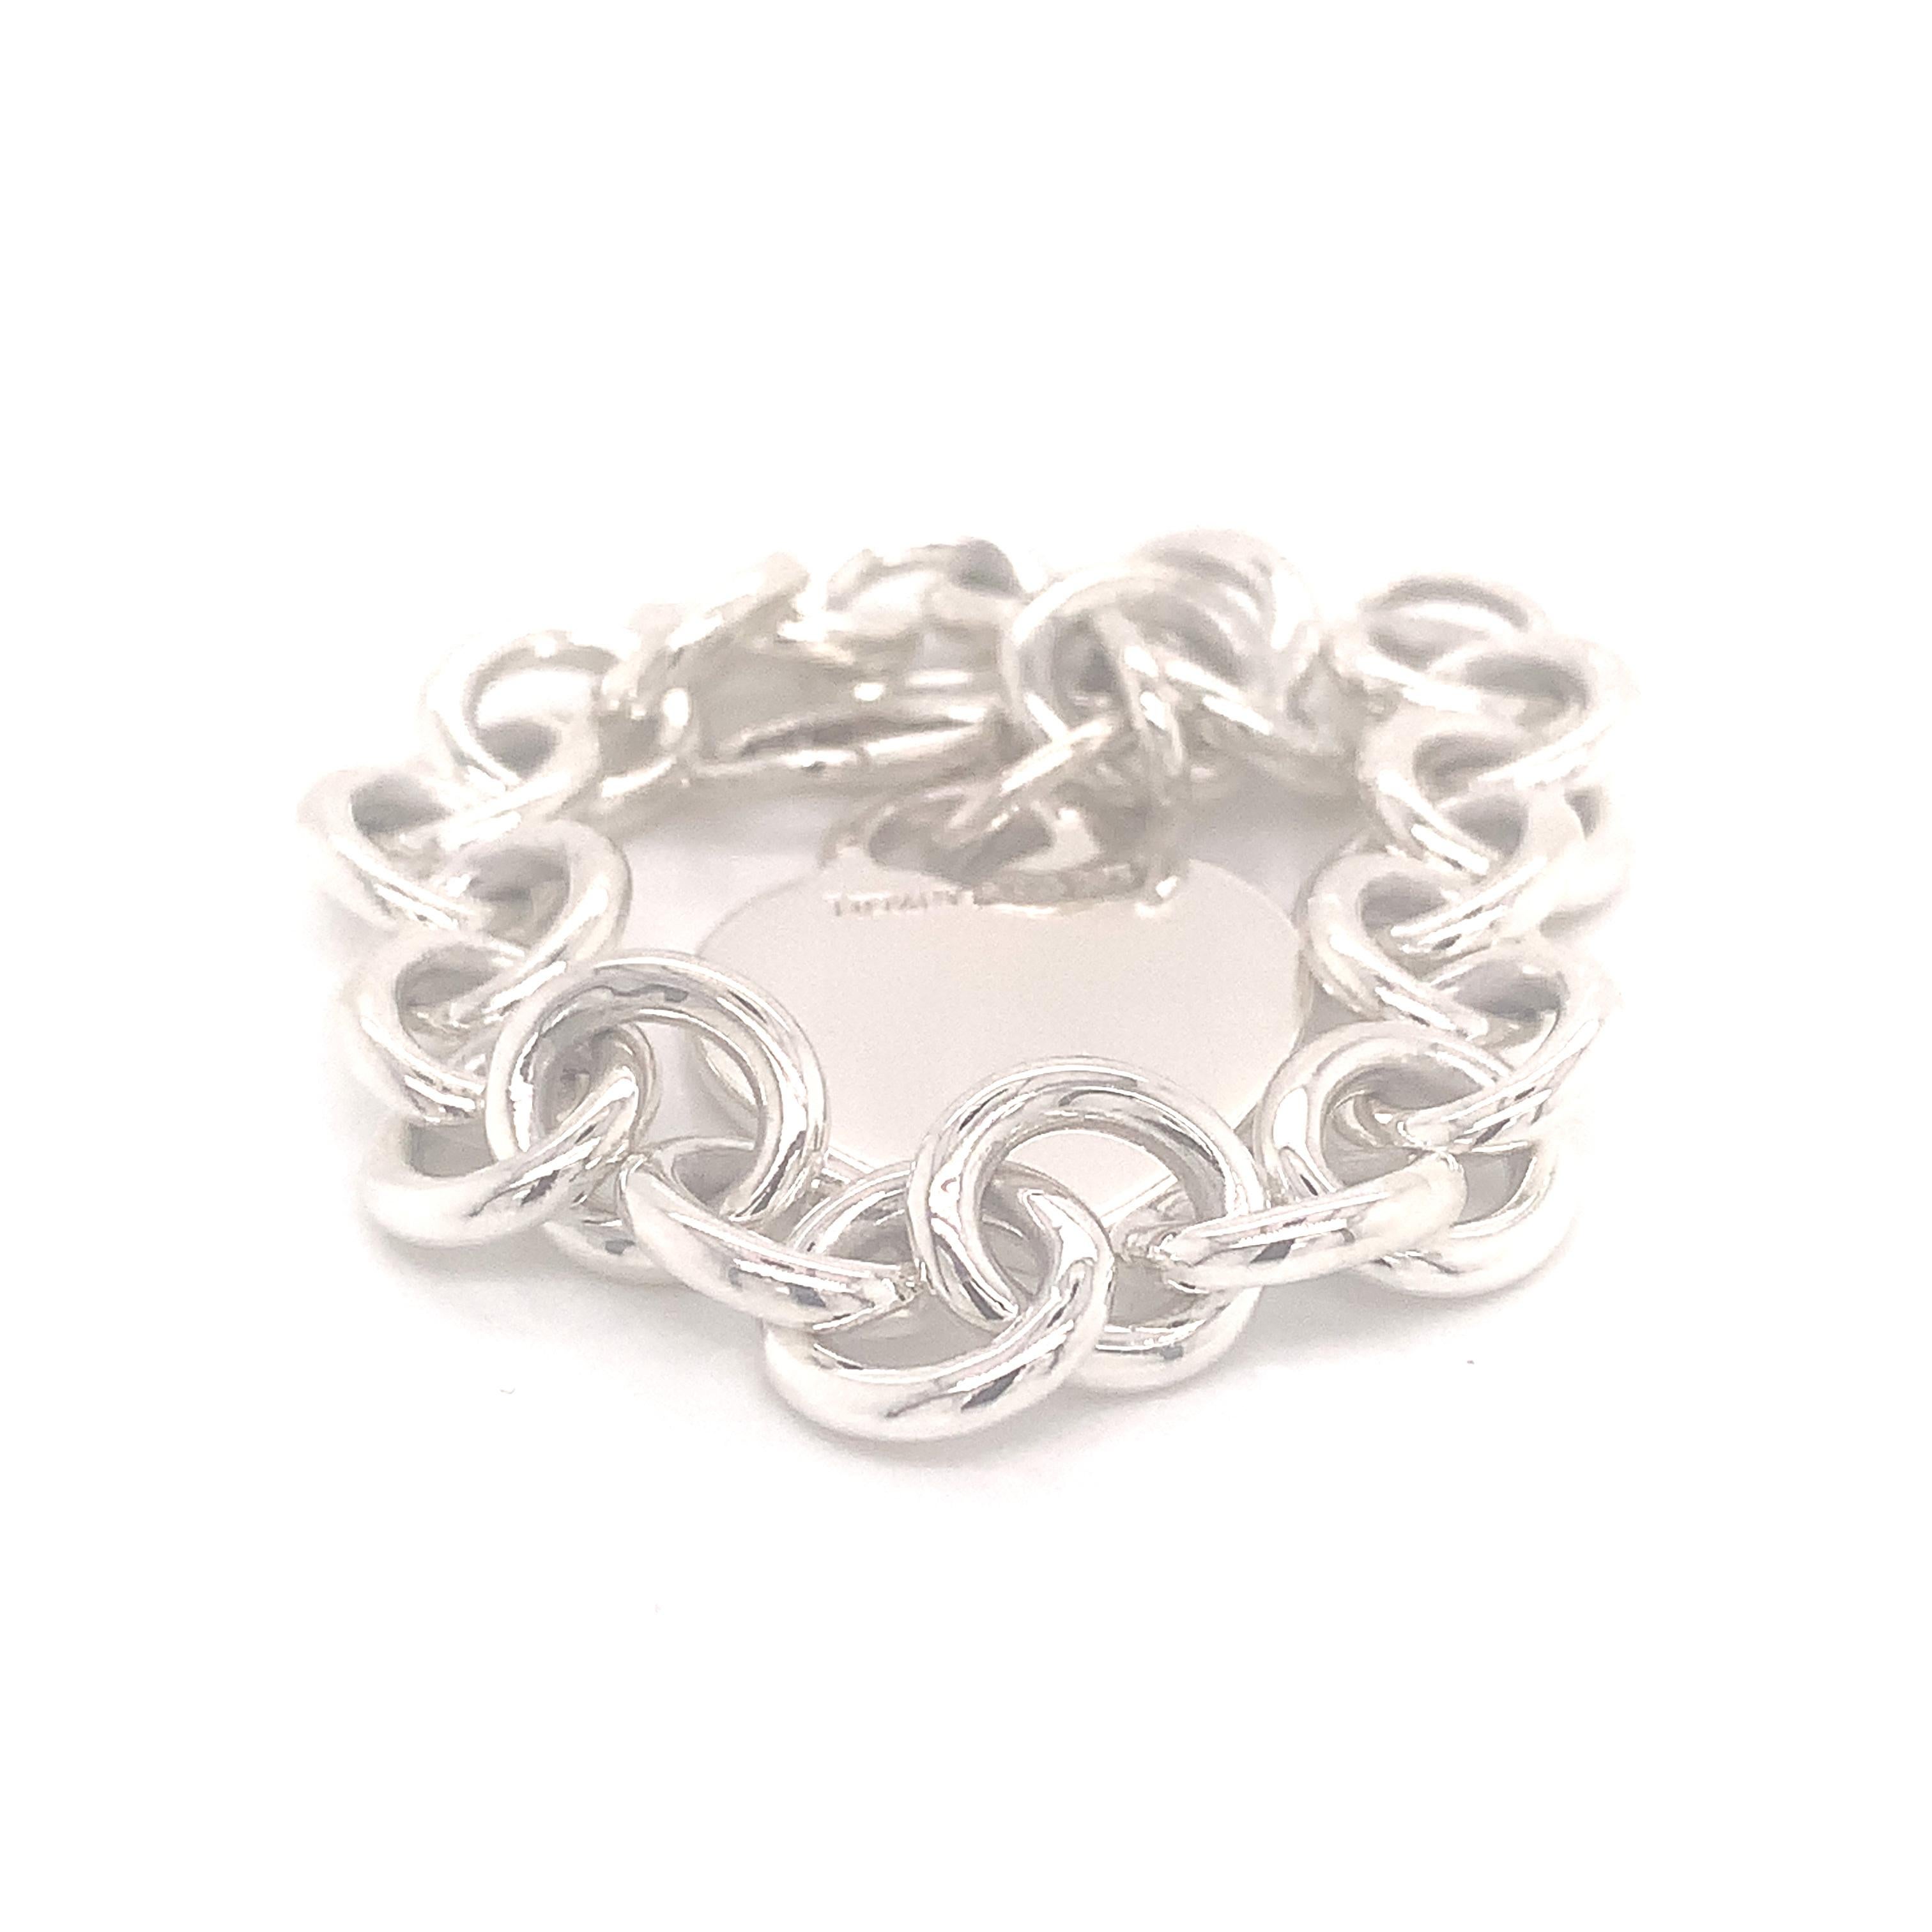 Tiffany & Co. Estate Bracelet Sterling Silver 7